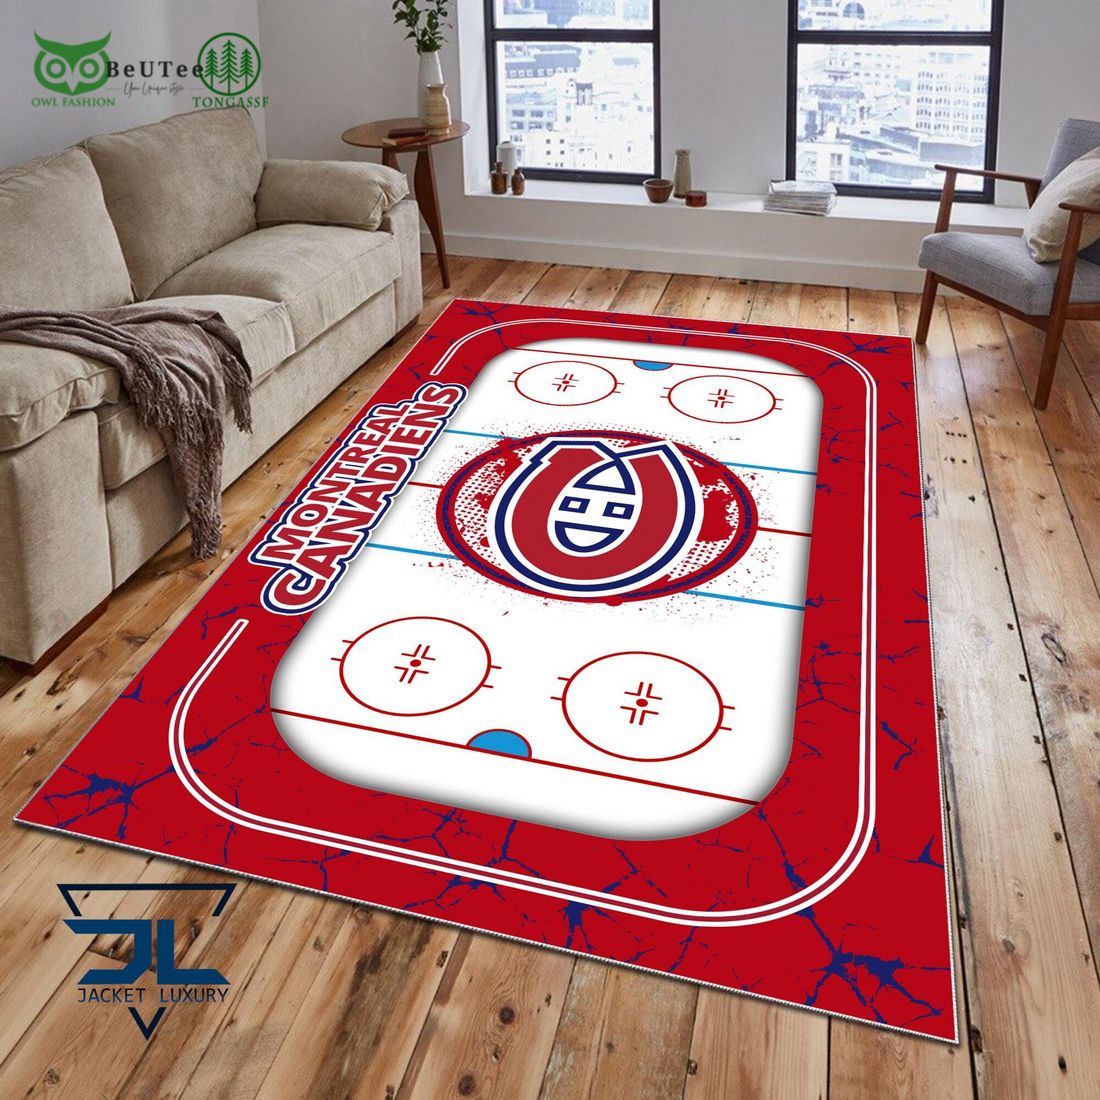 montreal canadiens nhl hockey team carpet rug 1 zhRyN